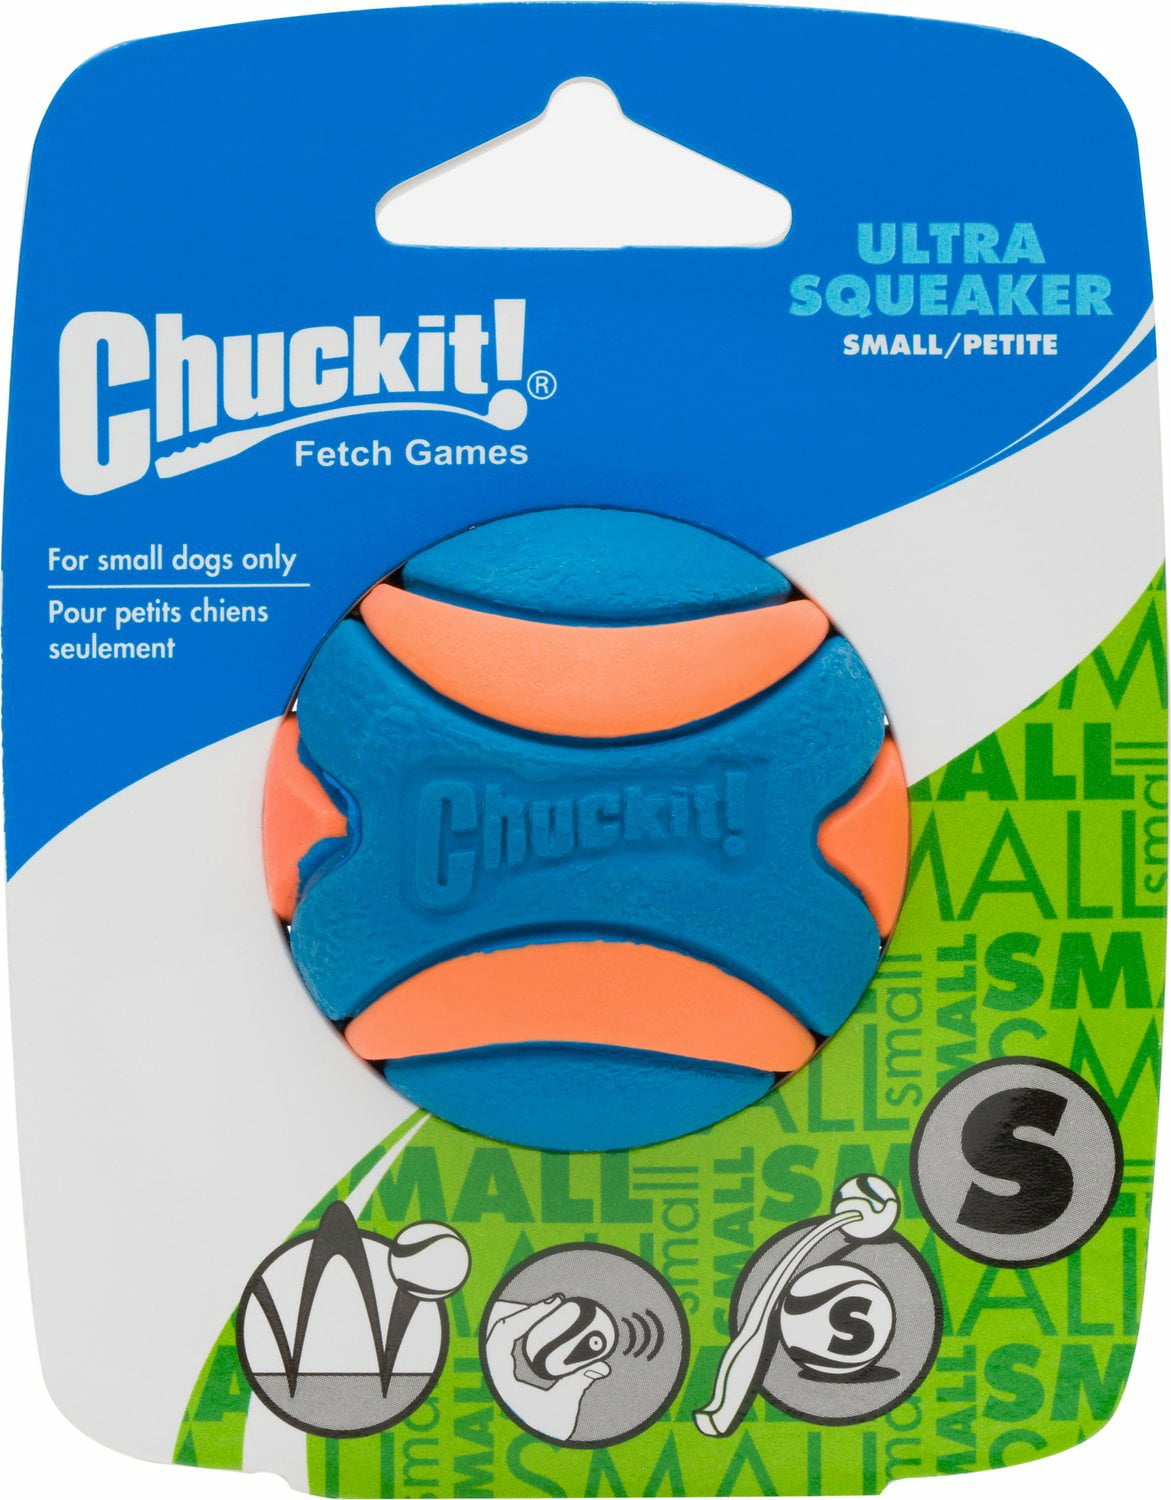 chuckit ultra squeaker ball small